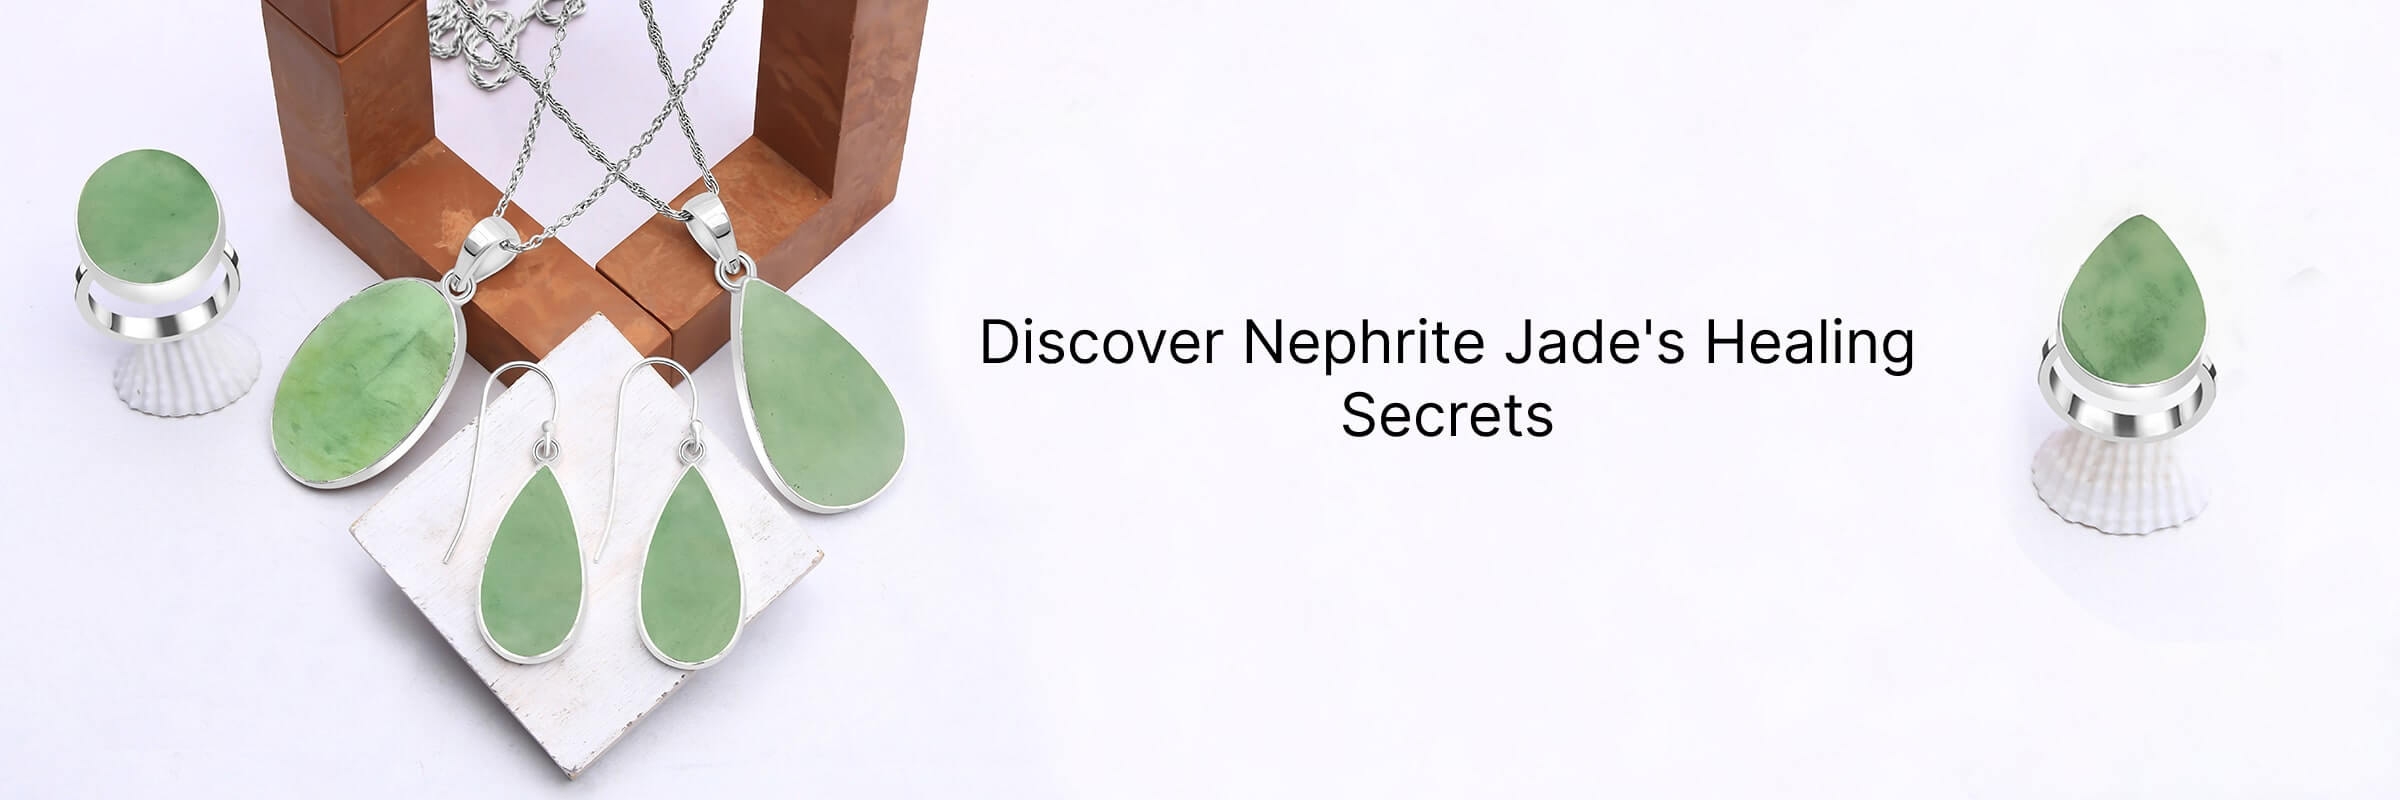 Nephrite Jade Physical Healing Properties